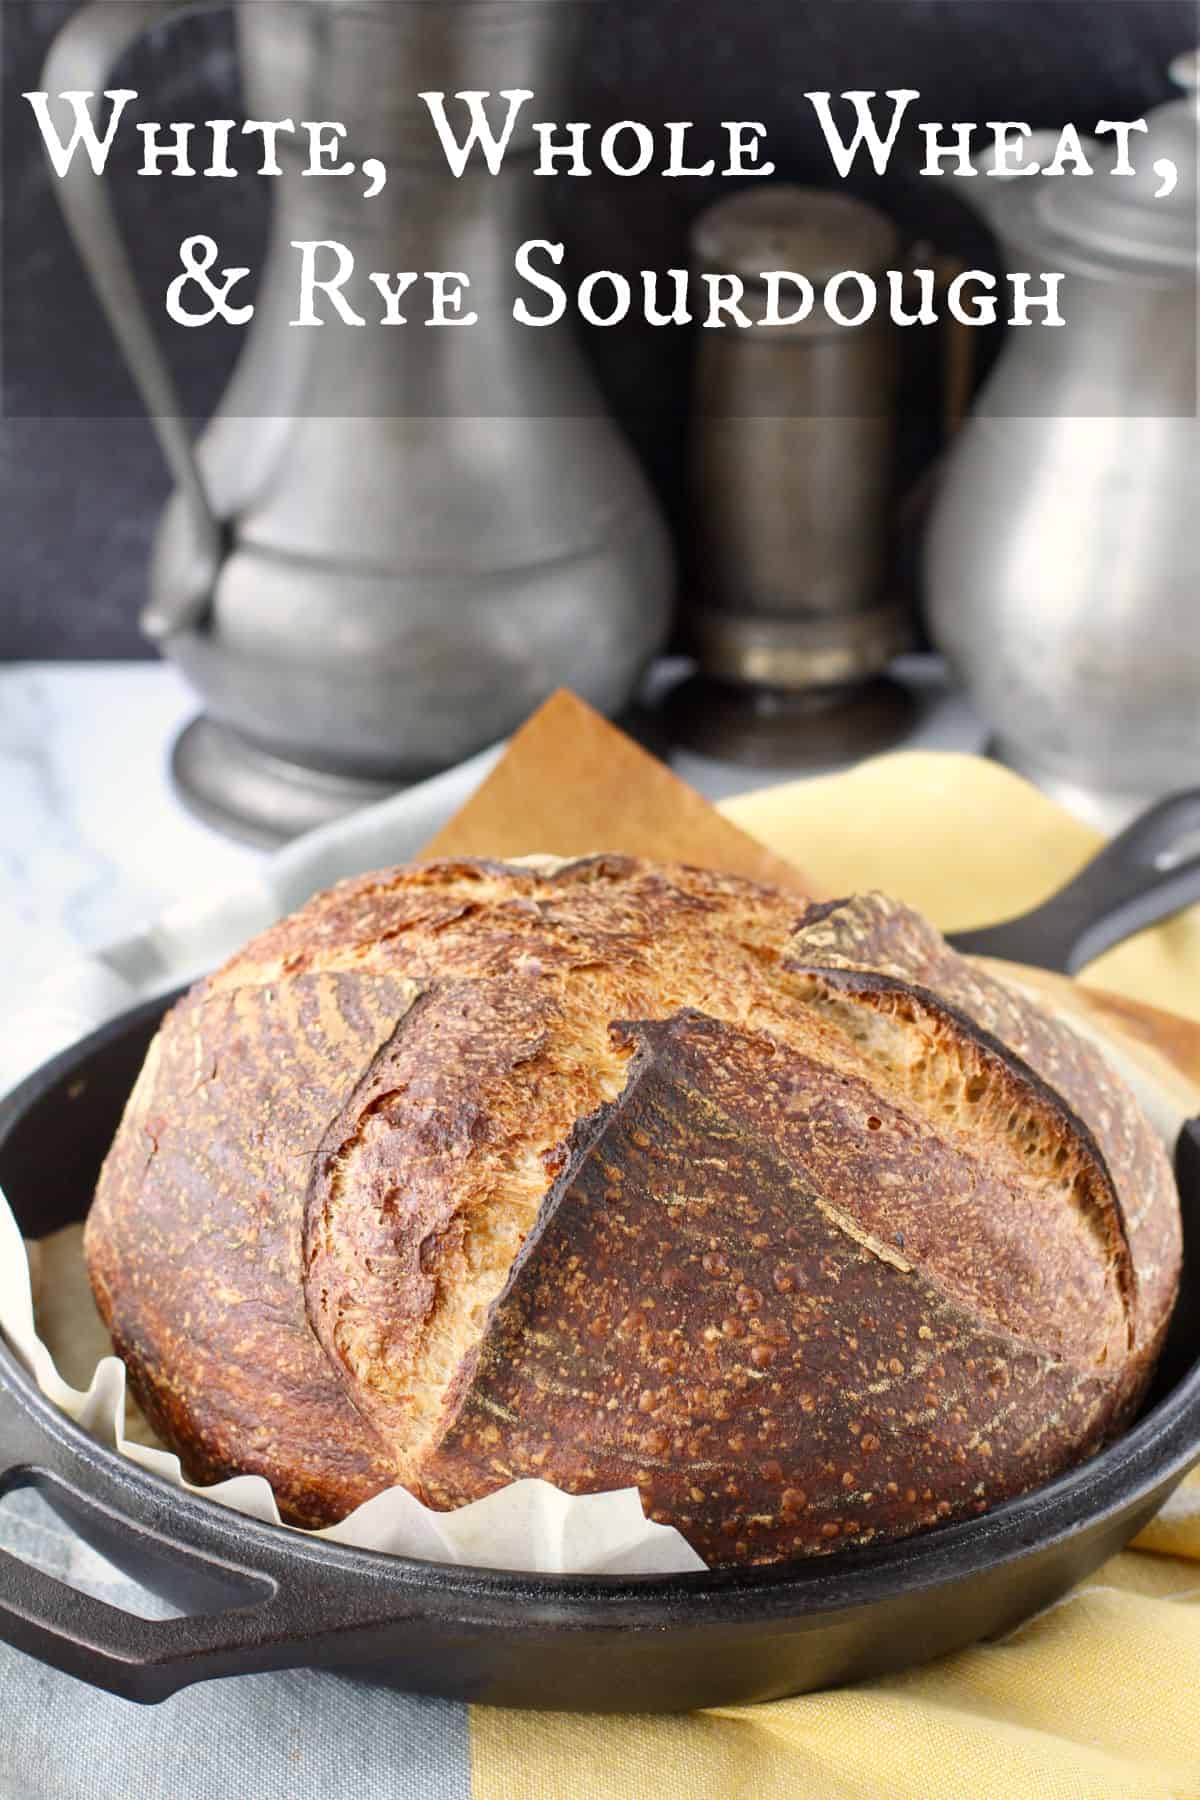 Crusty Dutch Oven Sourdough Bread - Ambers Kitchen Cooks